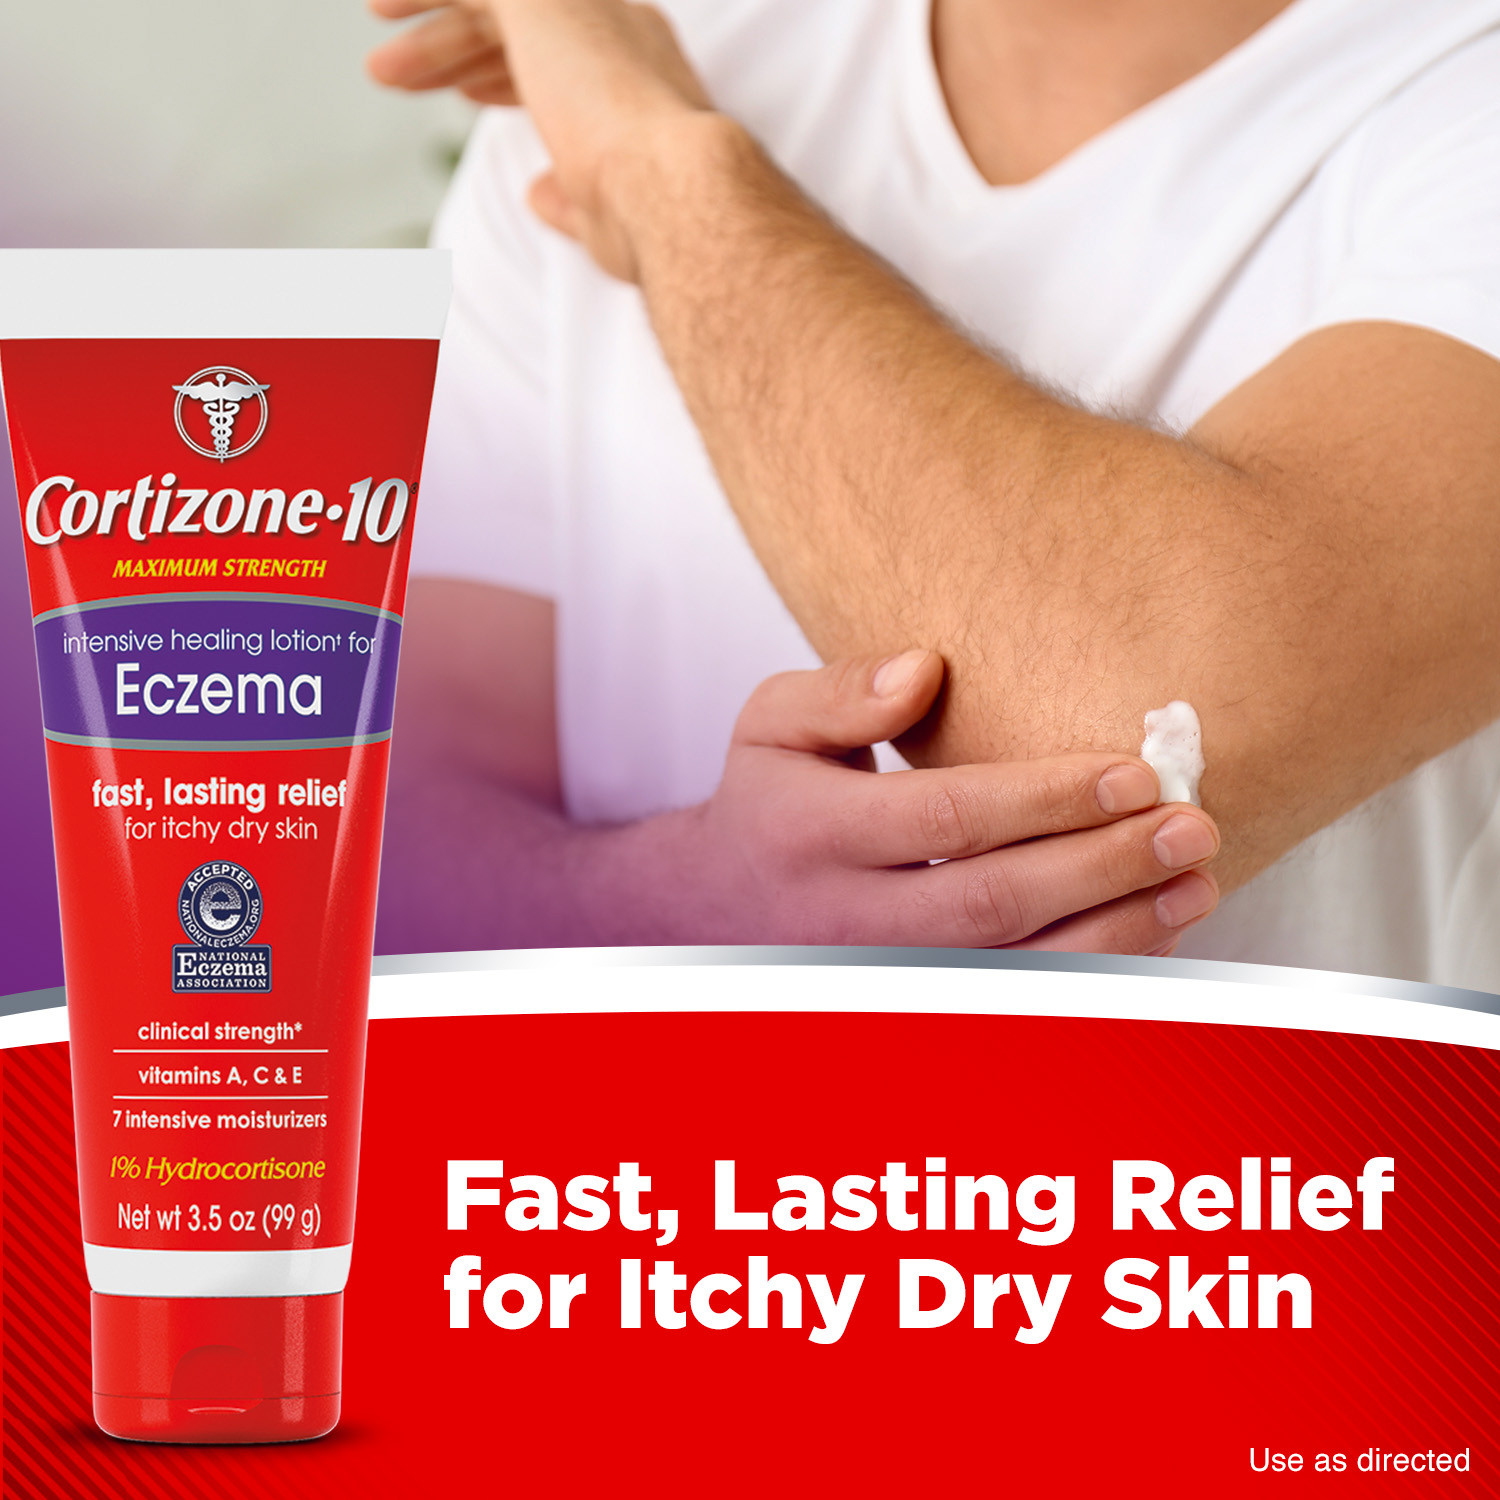 Cortizone-10 1% Hydrocortisone Anti Itch Cream for Eczema and Bug Bite Relief, Maximum Strength, 3.5 oz - image 4 of 9